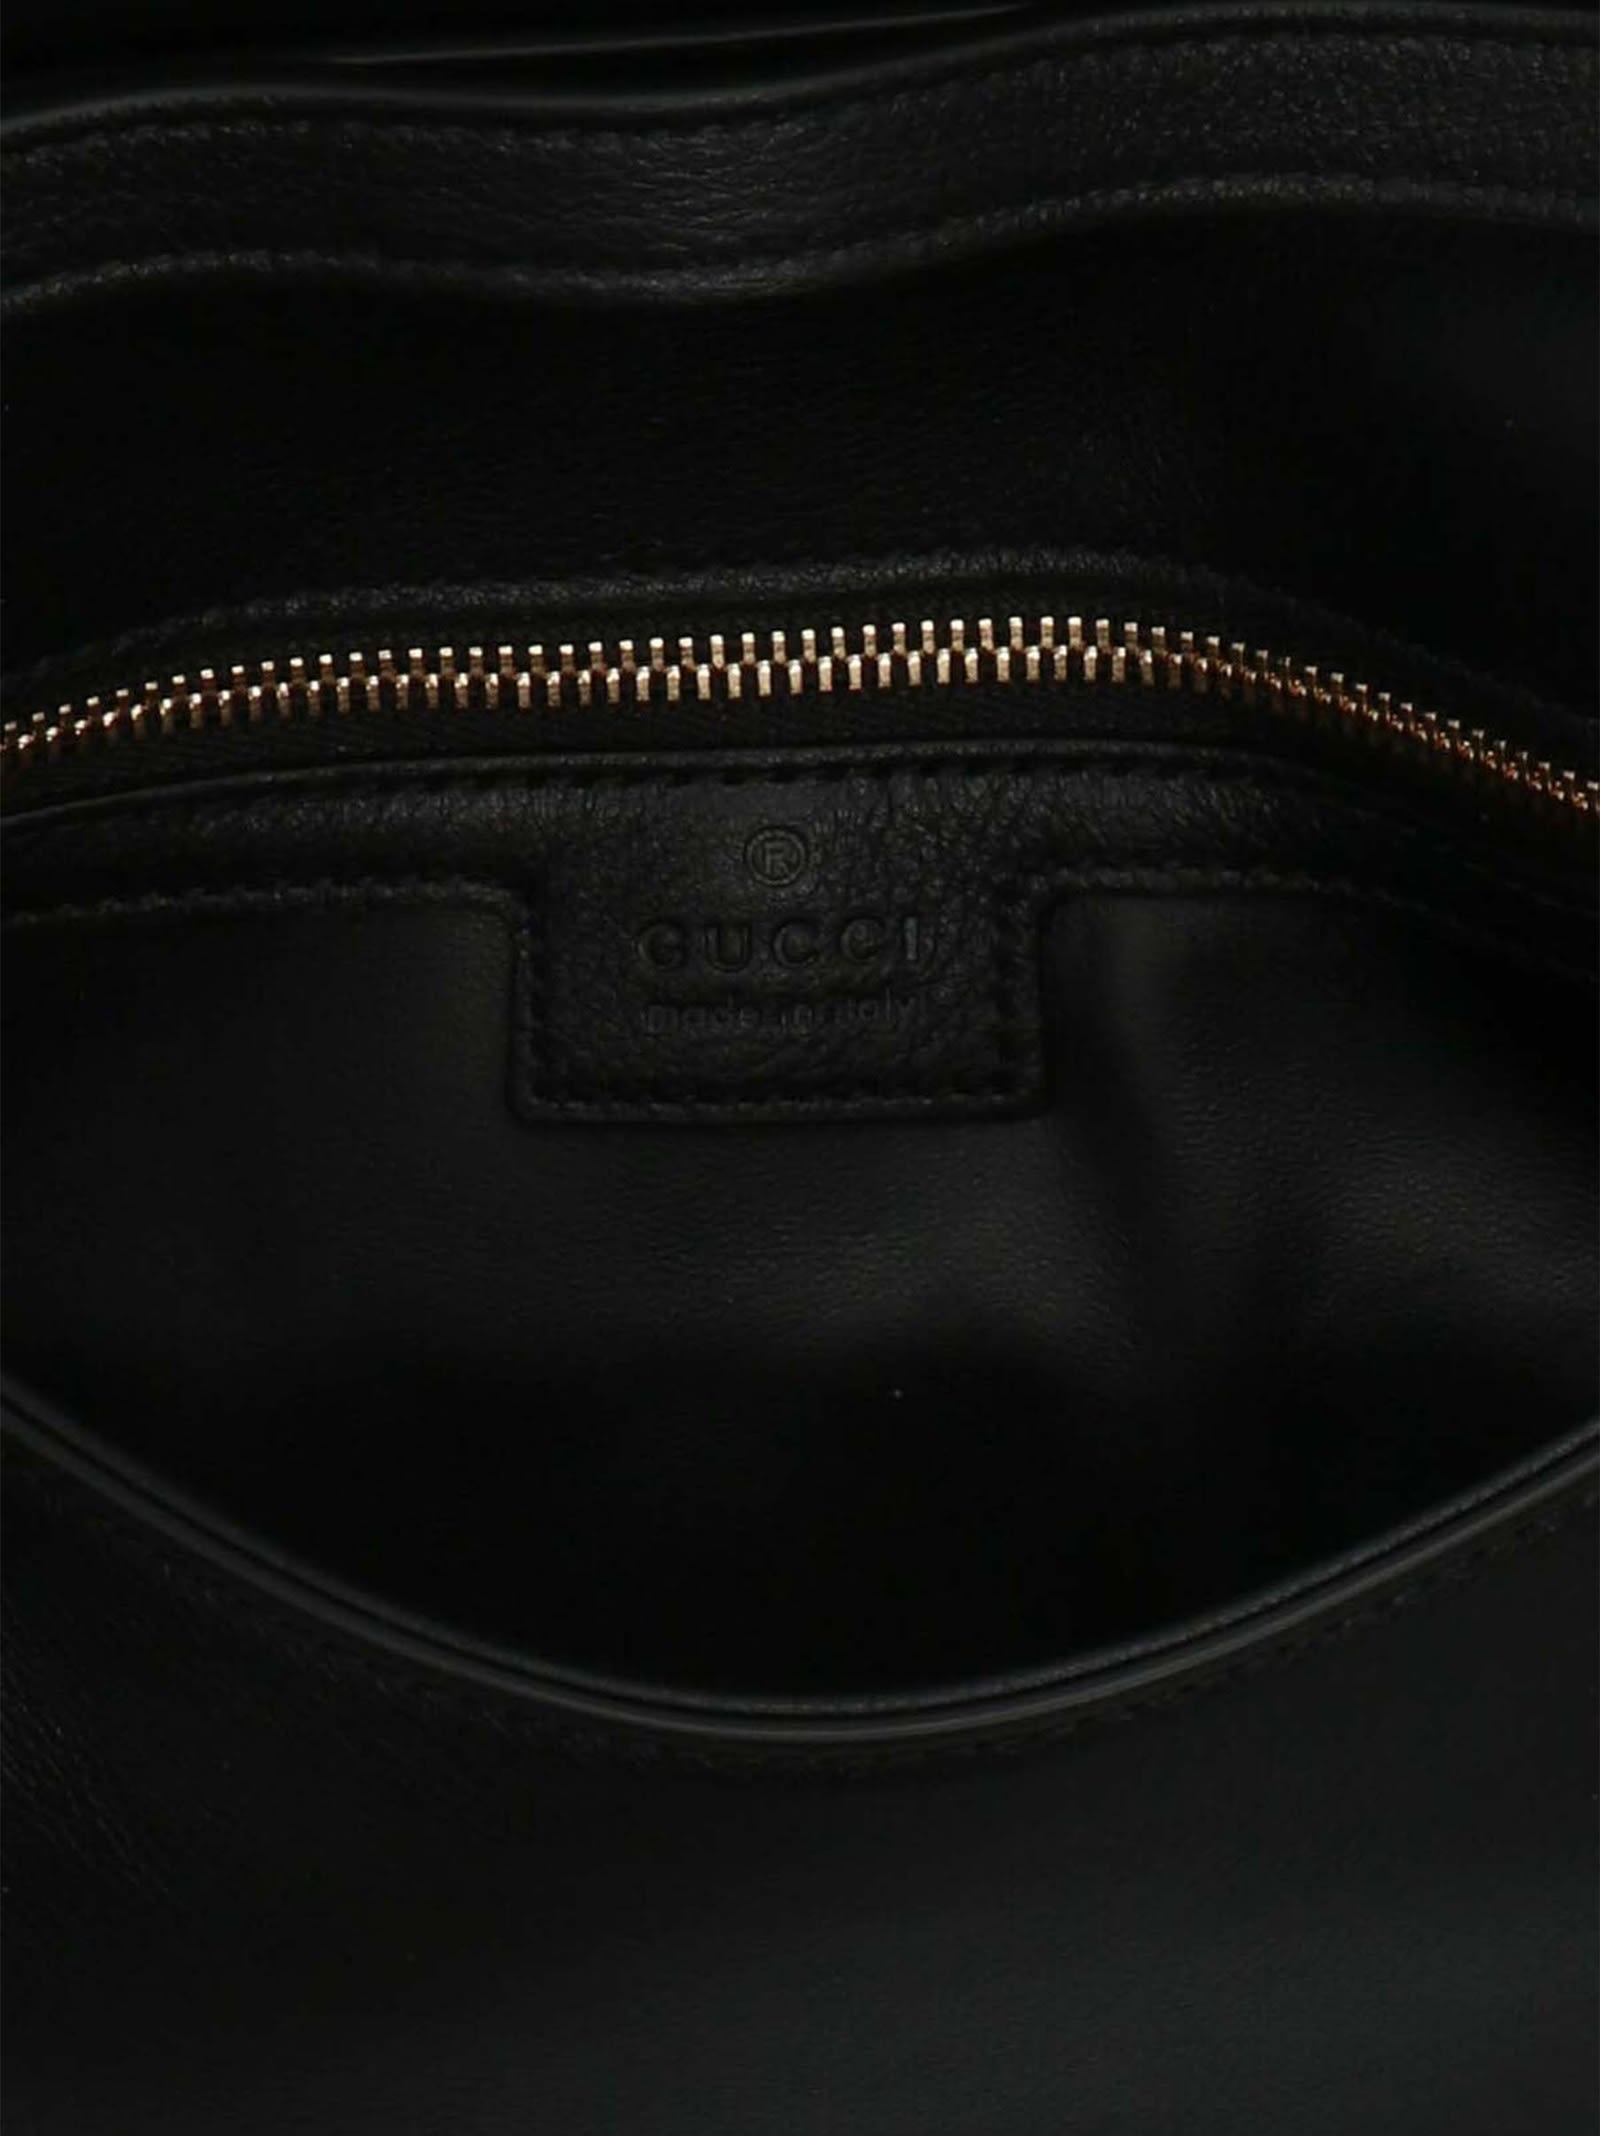 Shop Gucci Blondie Shoulder Bag In Nero